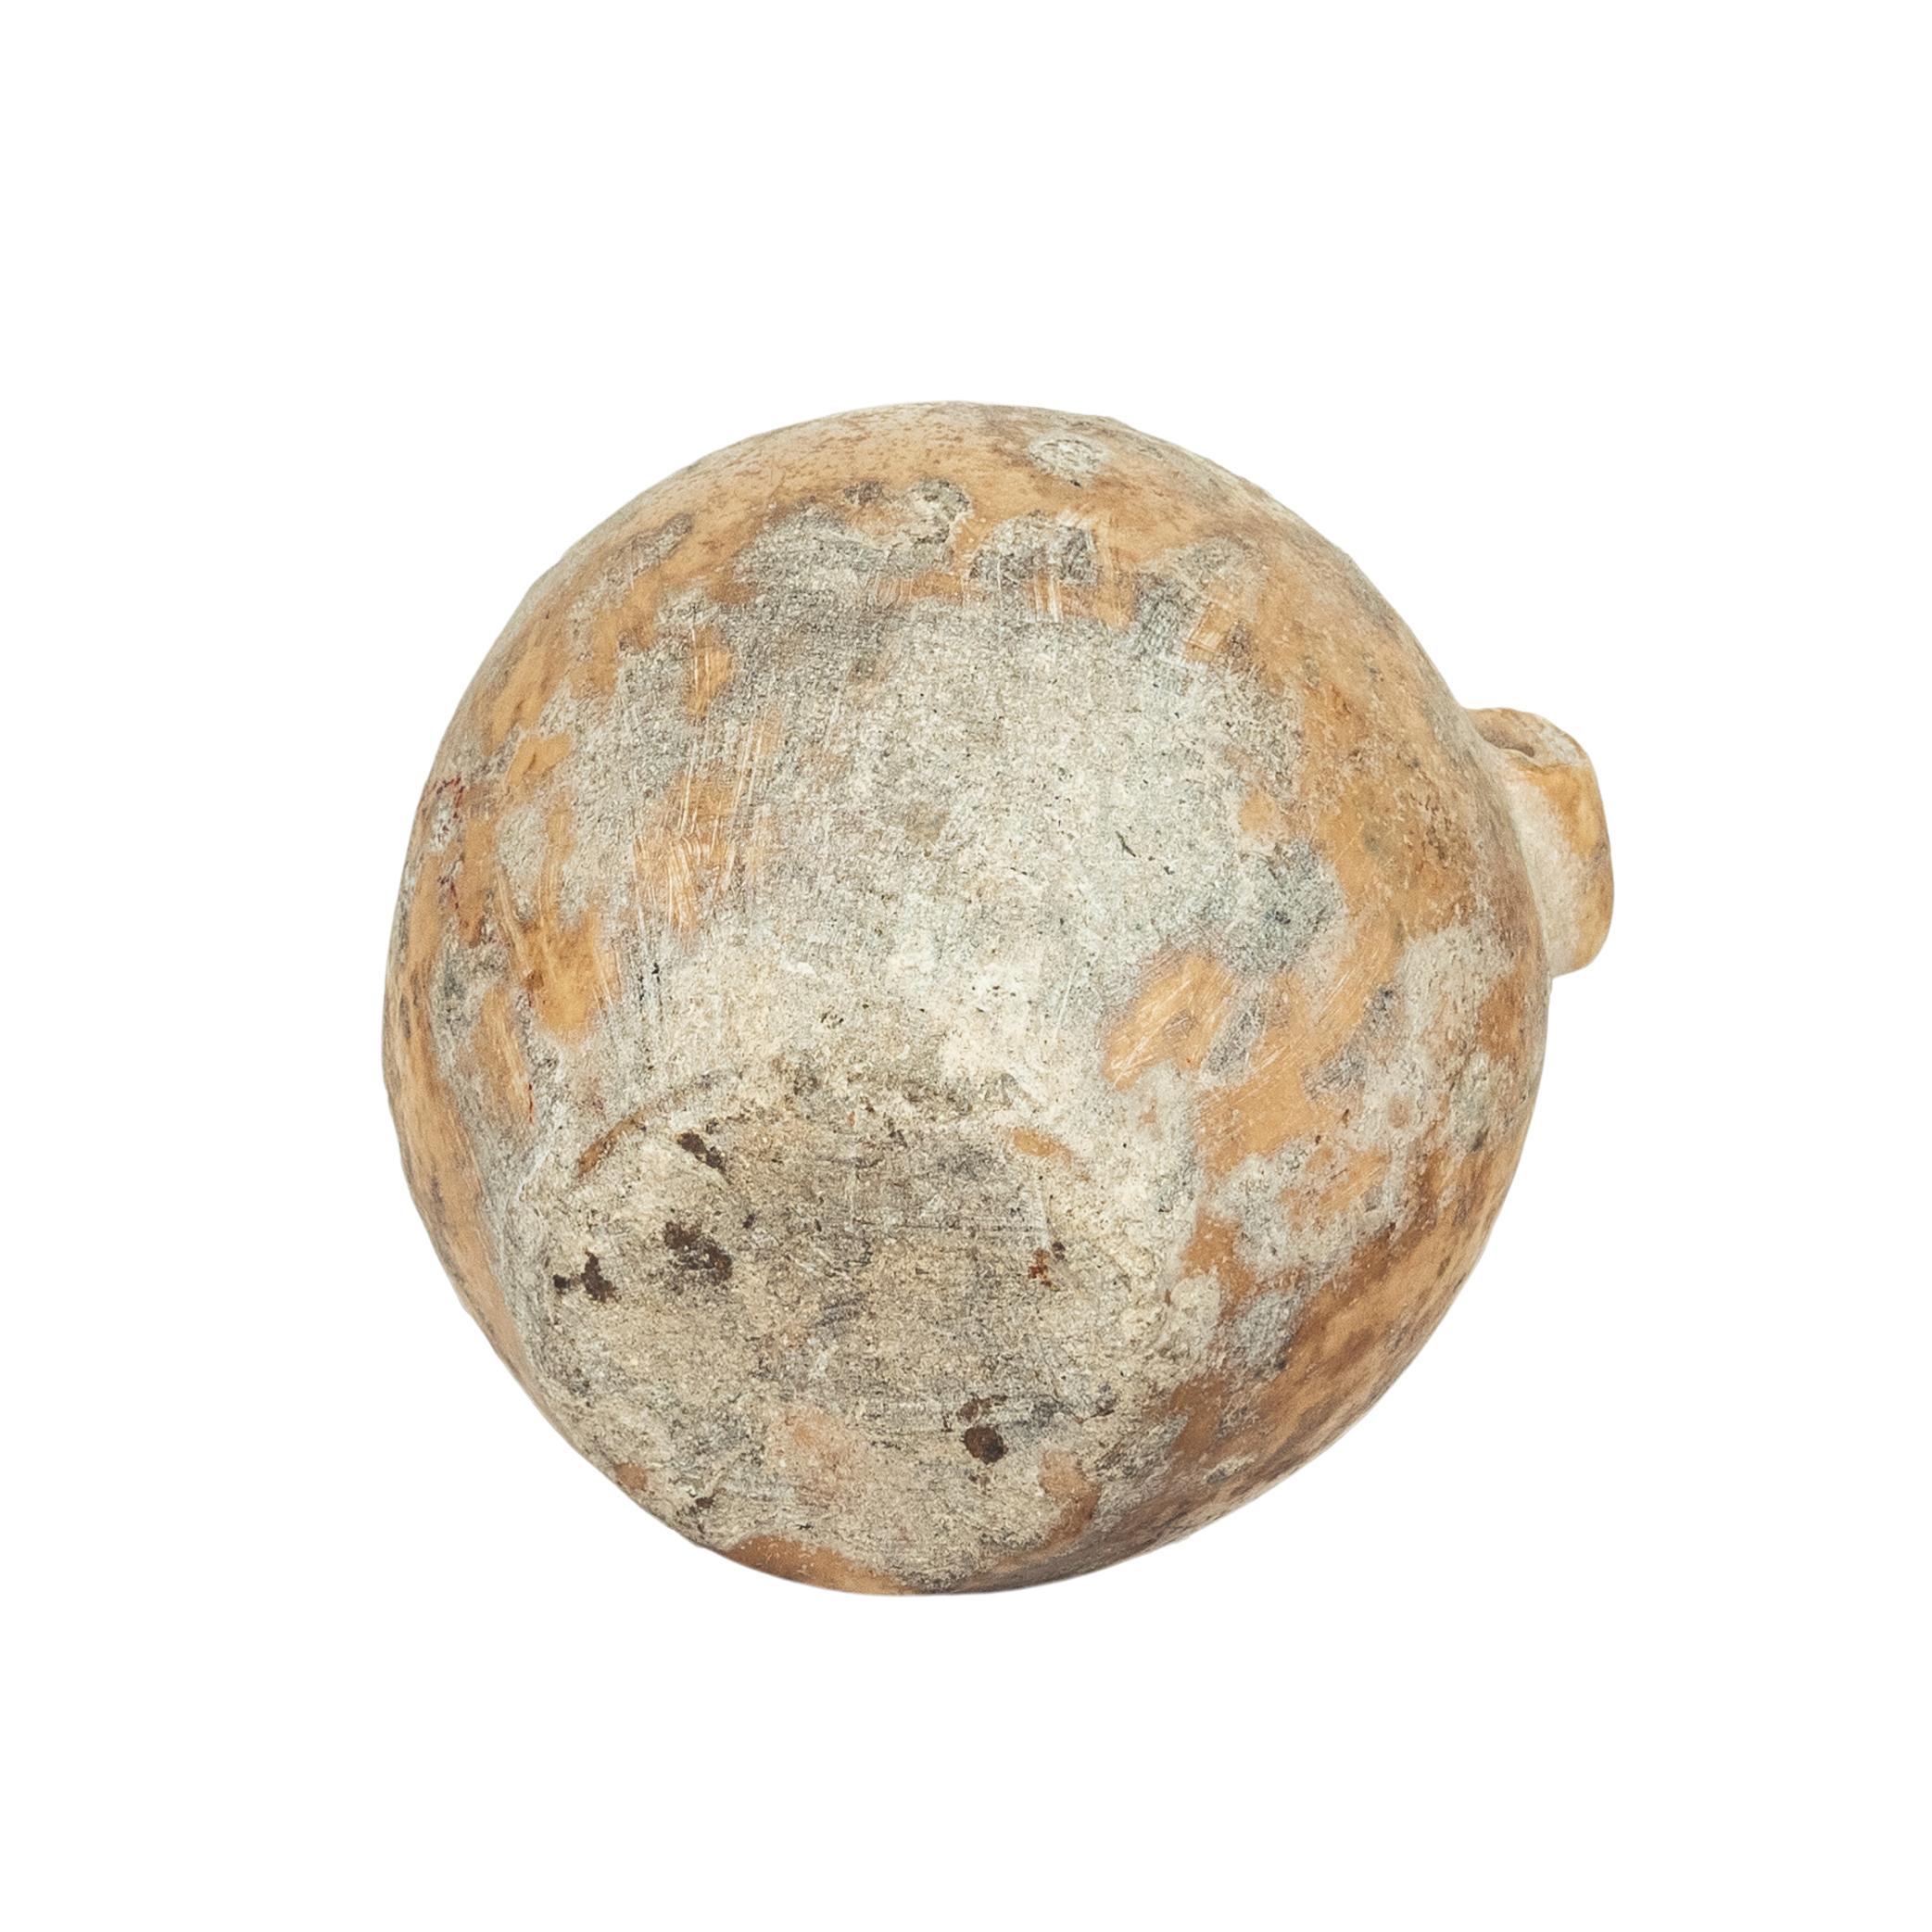 Ancient Egyptian Old Kingdom Miniature Lime Stone Vessel Jar 2600-2800 BCE For Sale 7